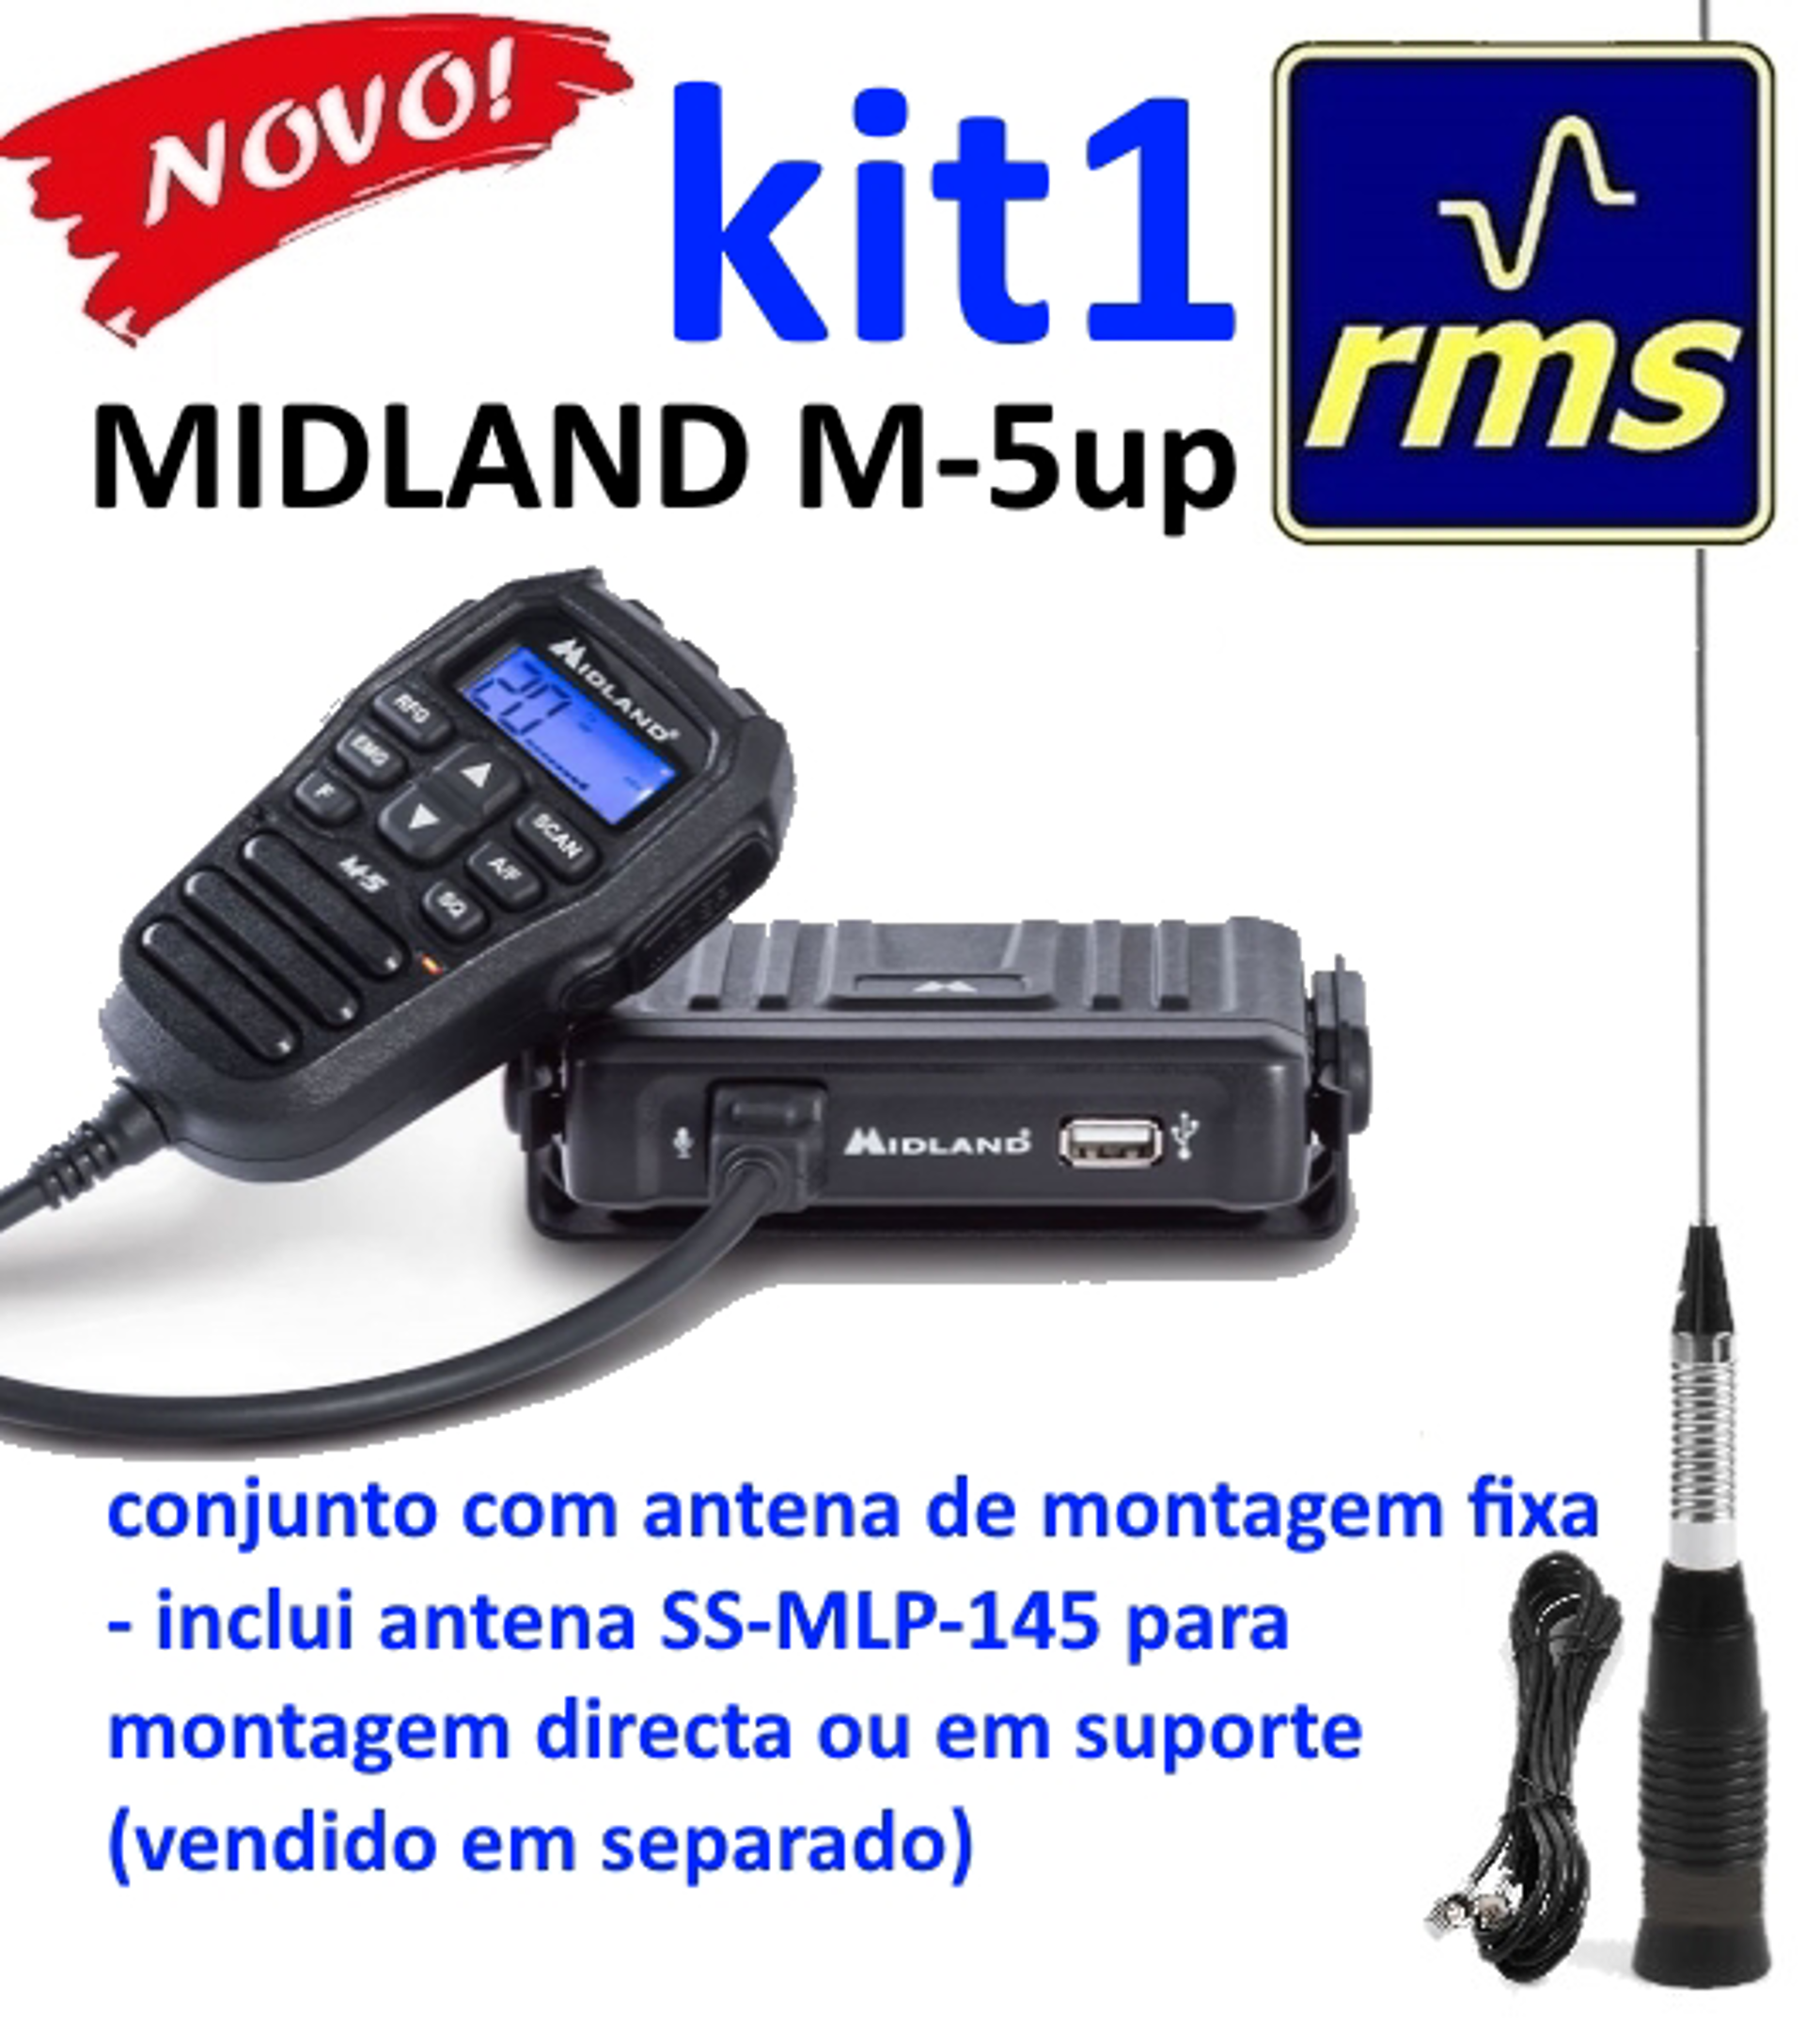 MIDLAND M-5up + antena SS-MLP-145